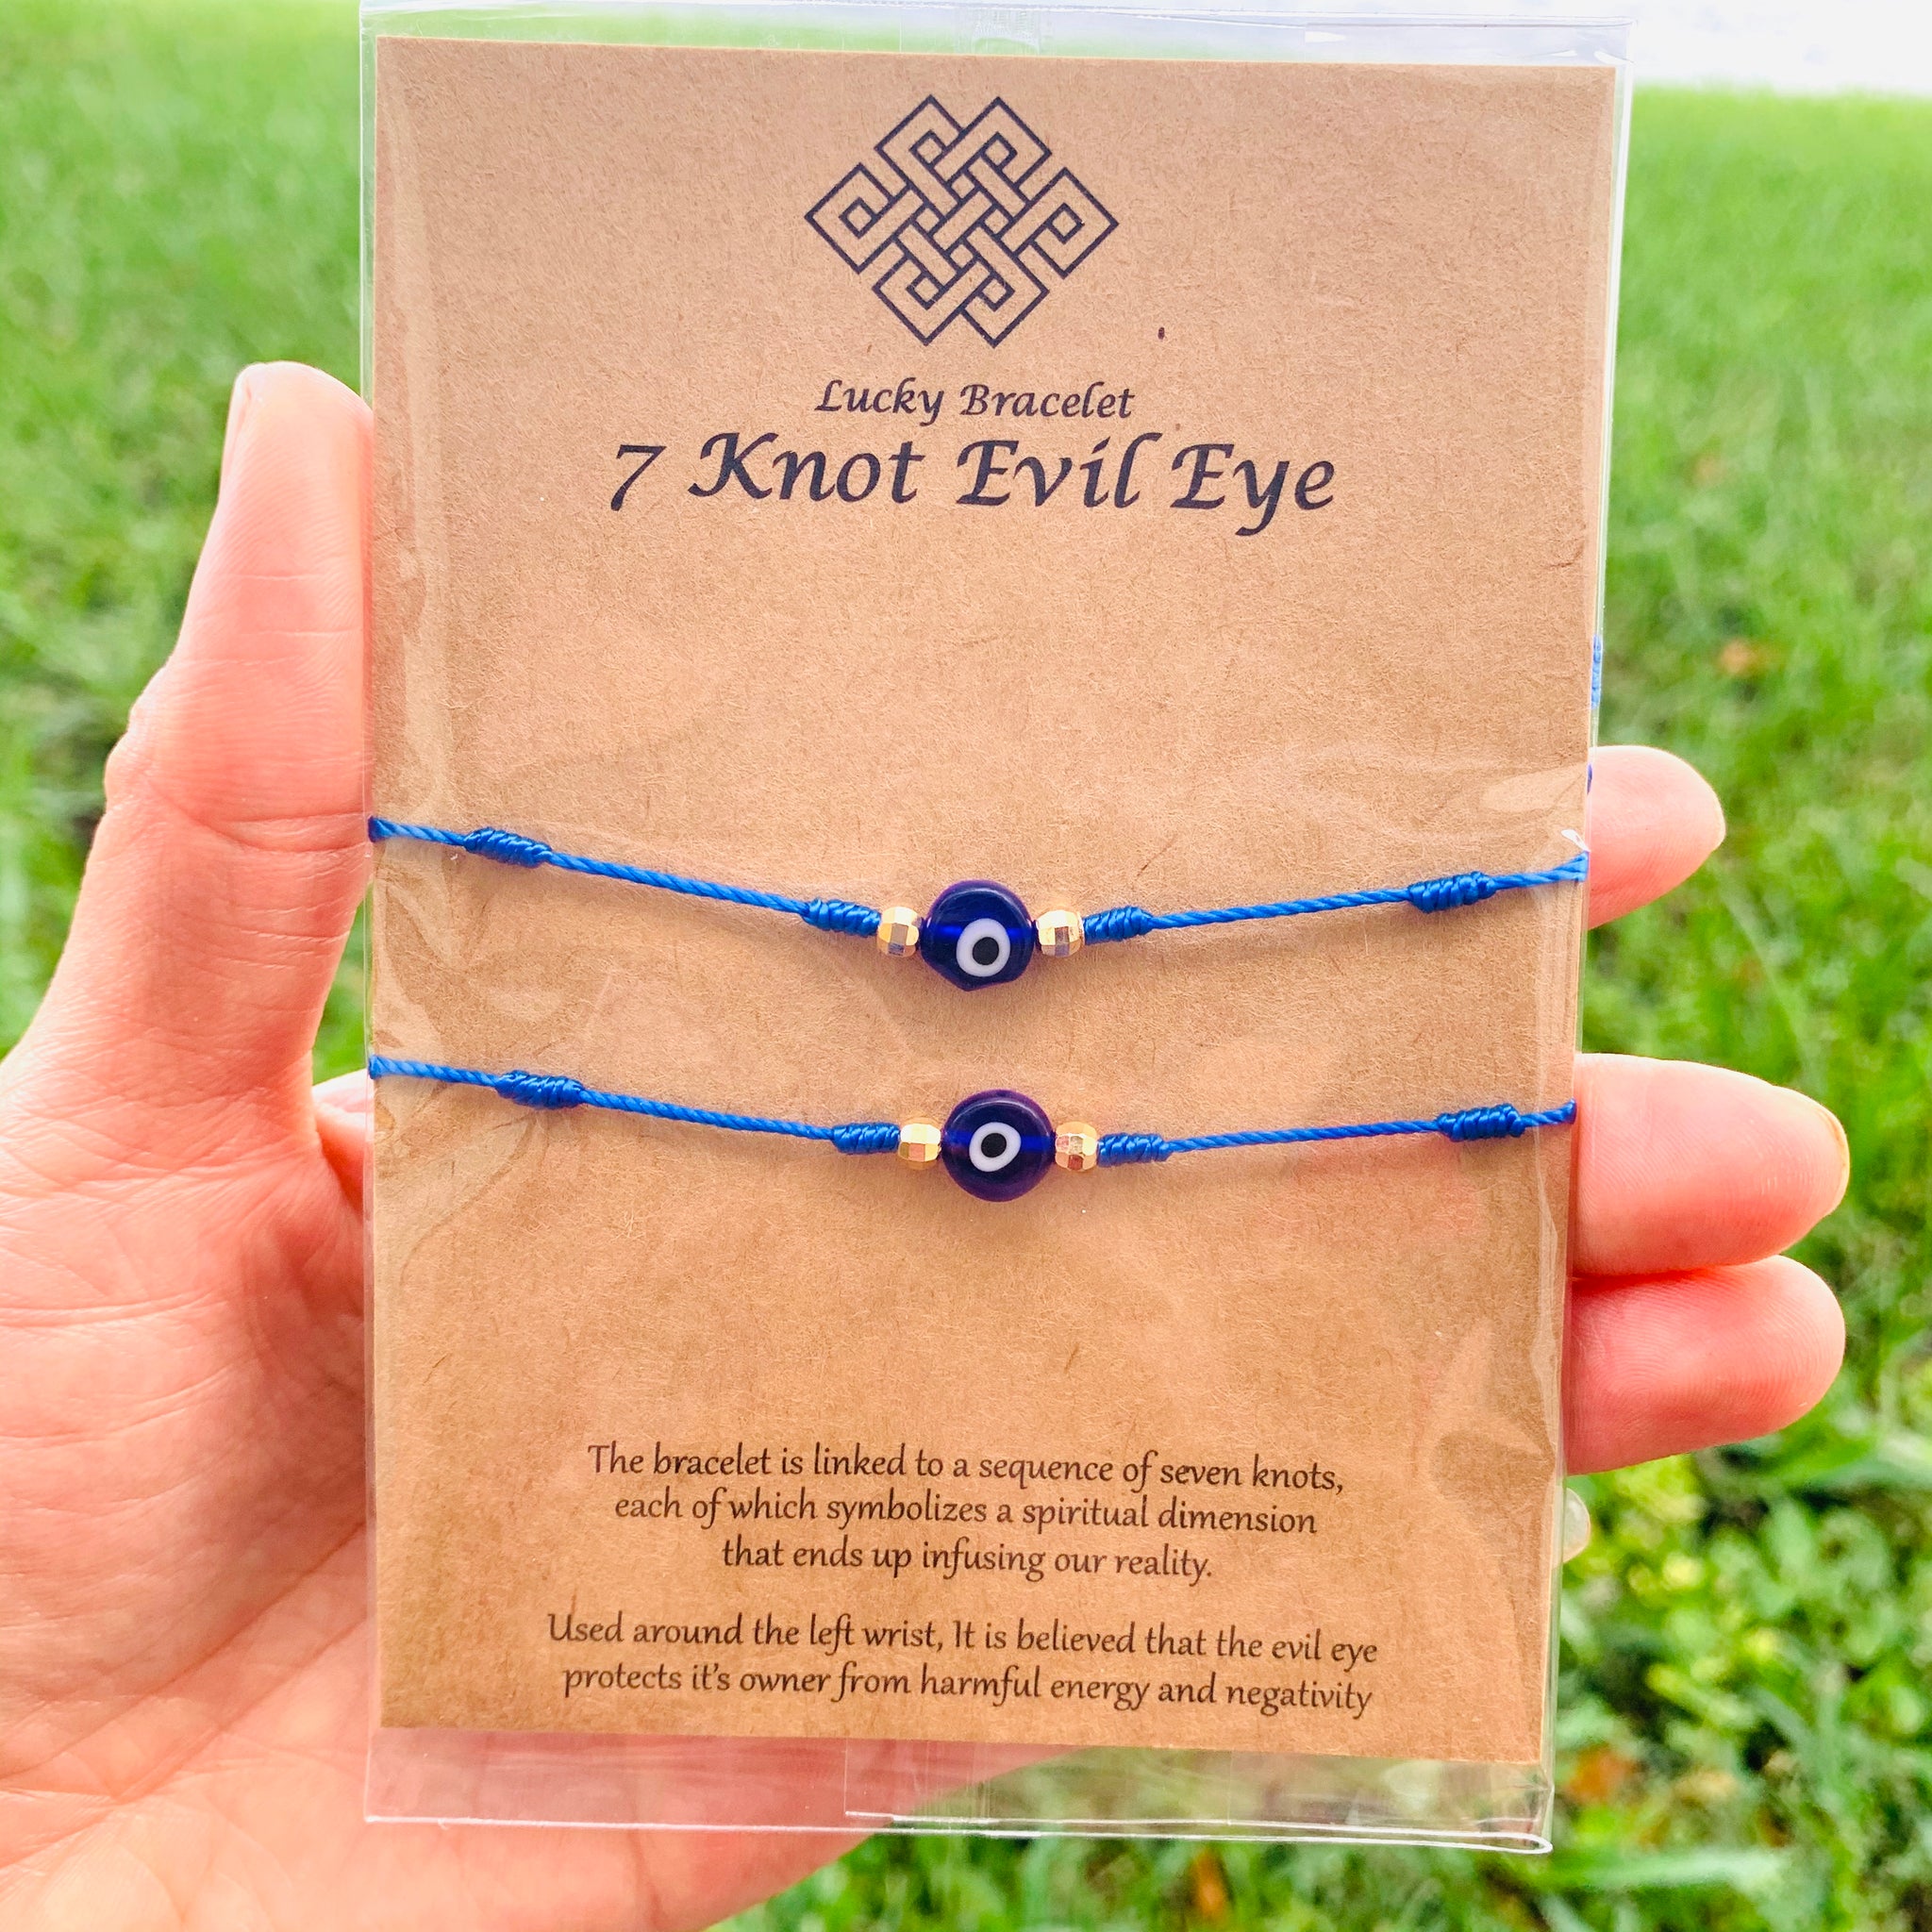 Elligent evil eye bracelet